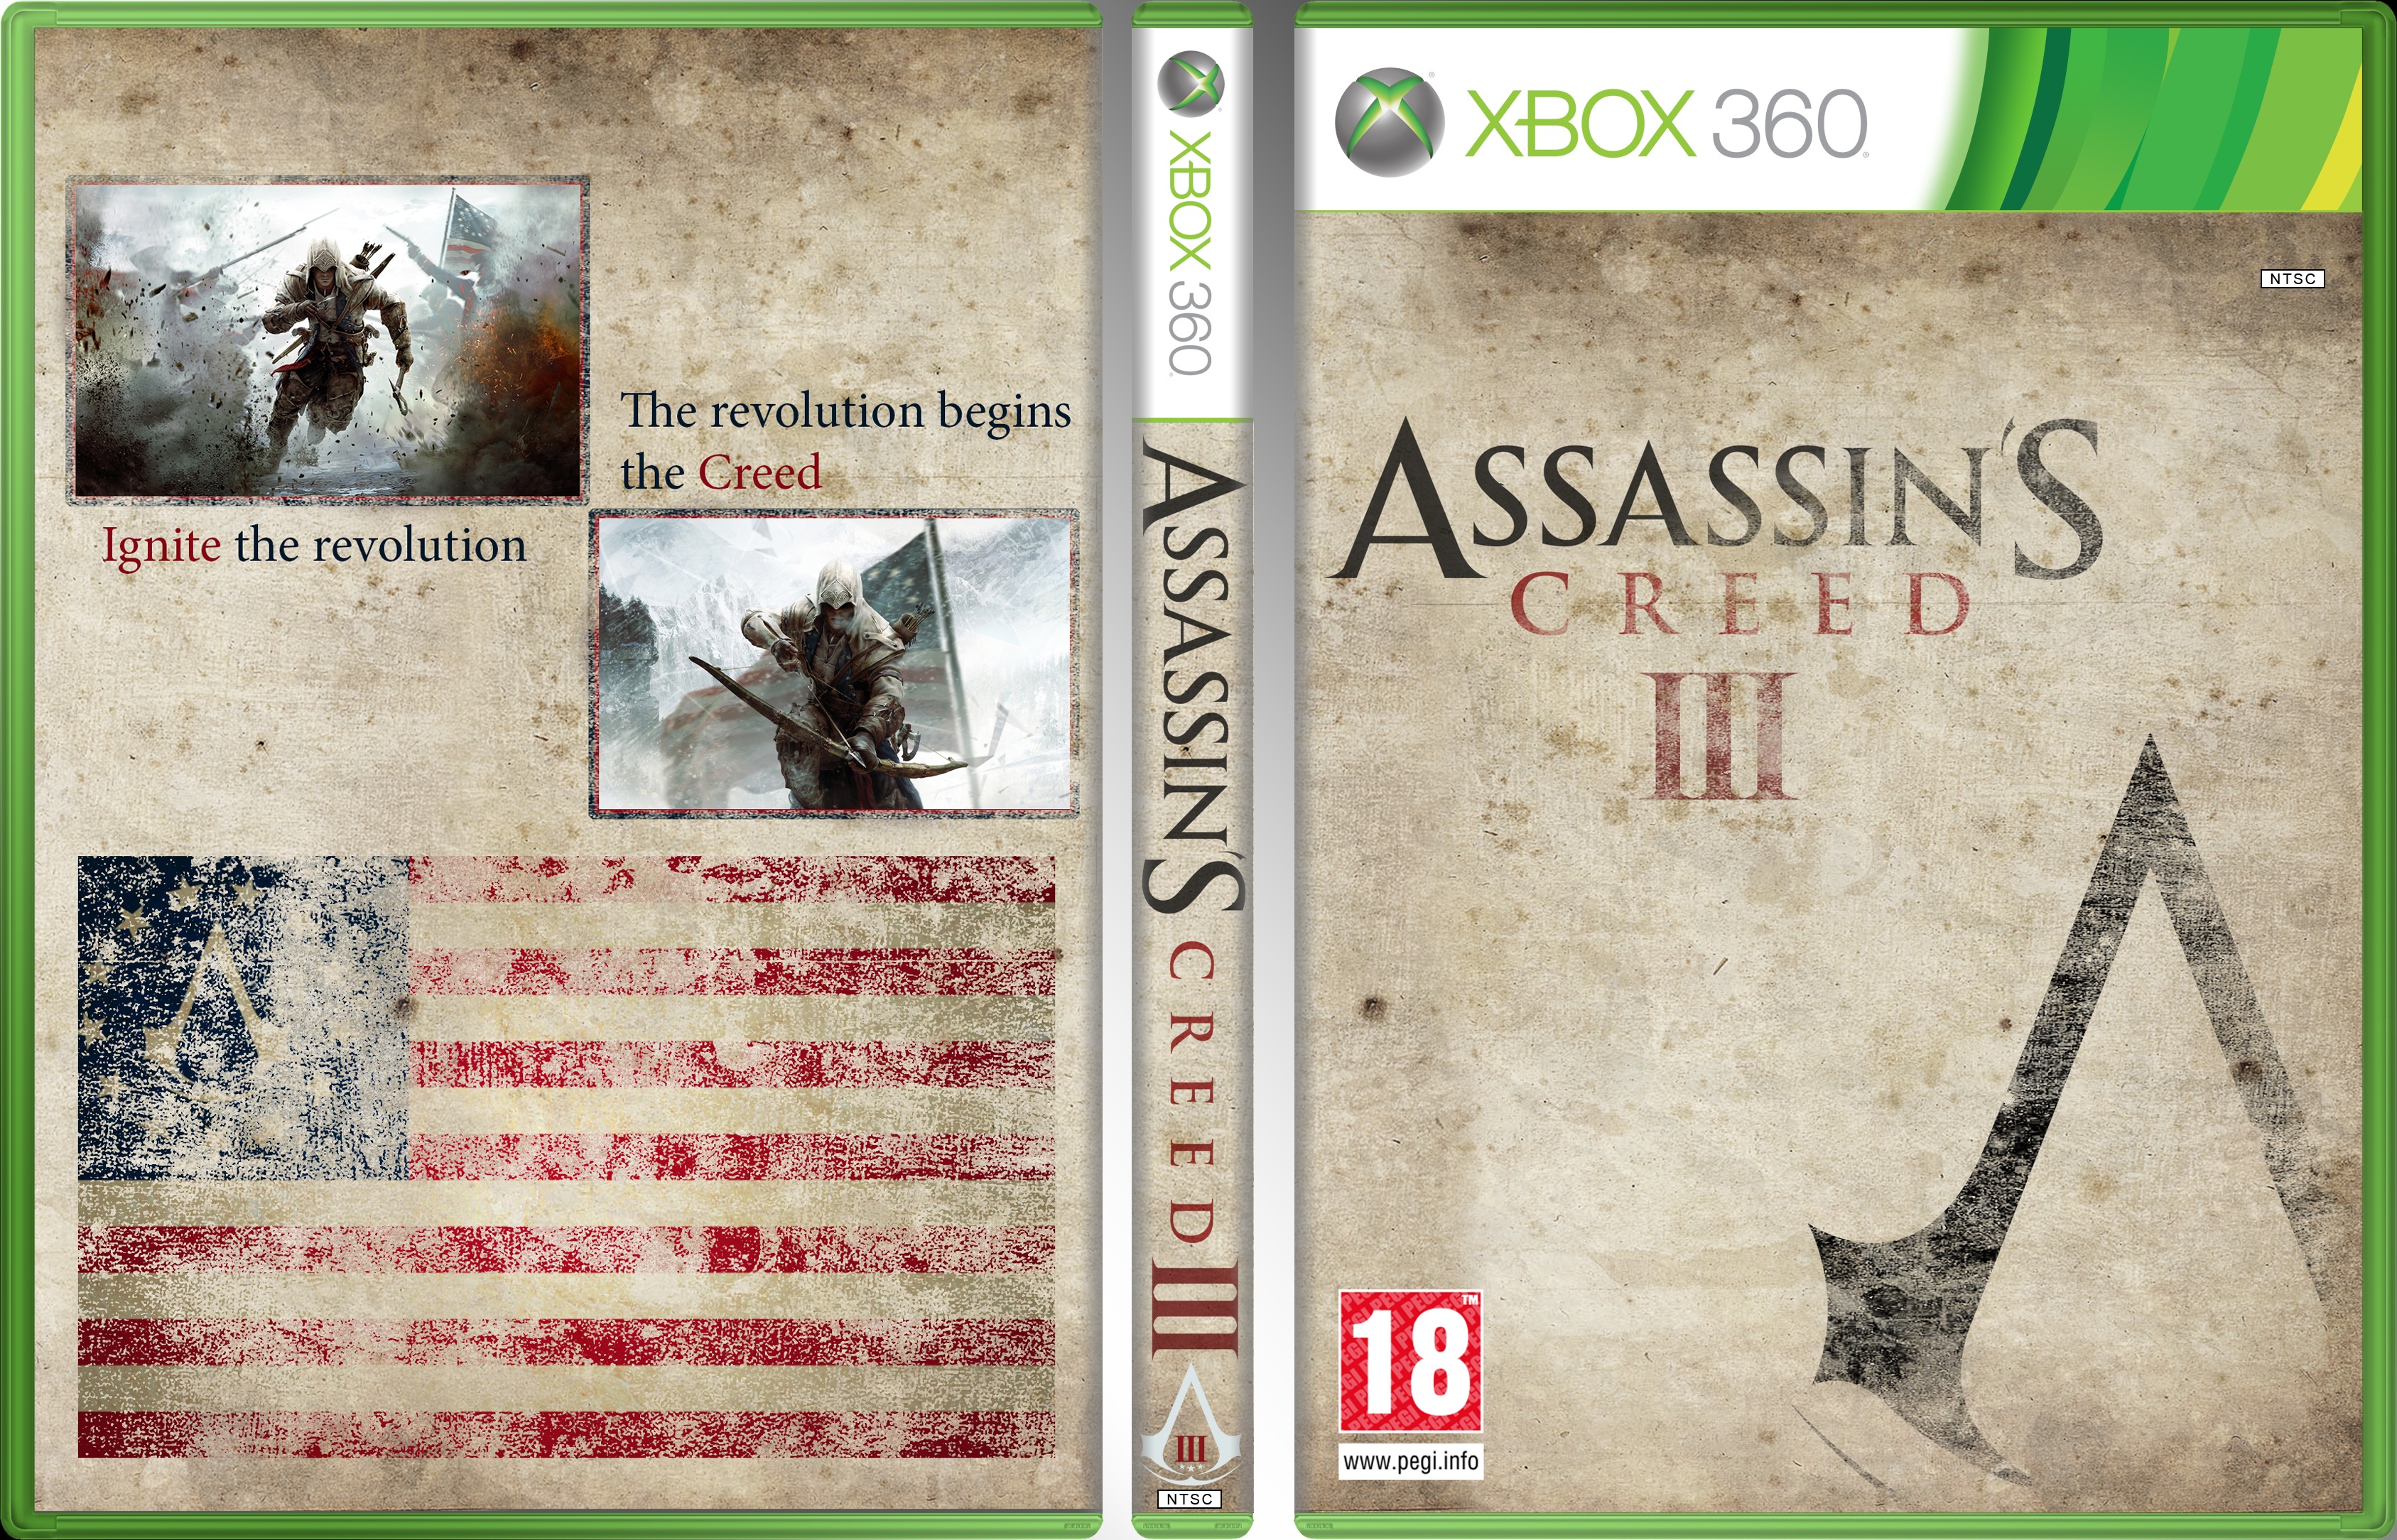 Assasin's Creed 3 box cover